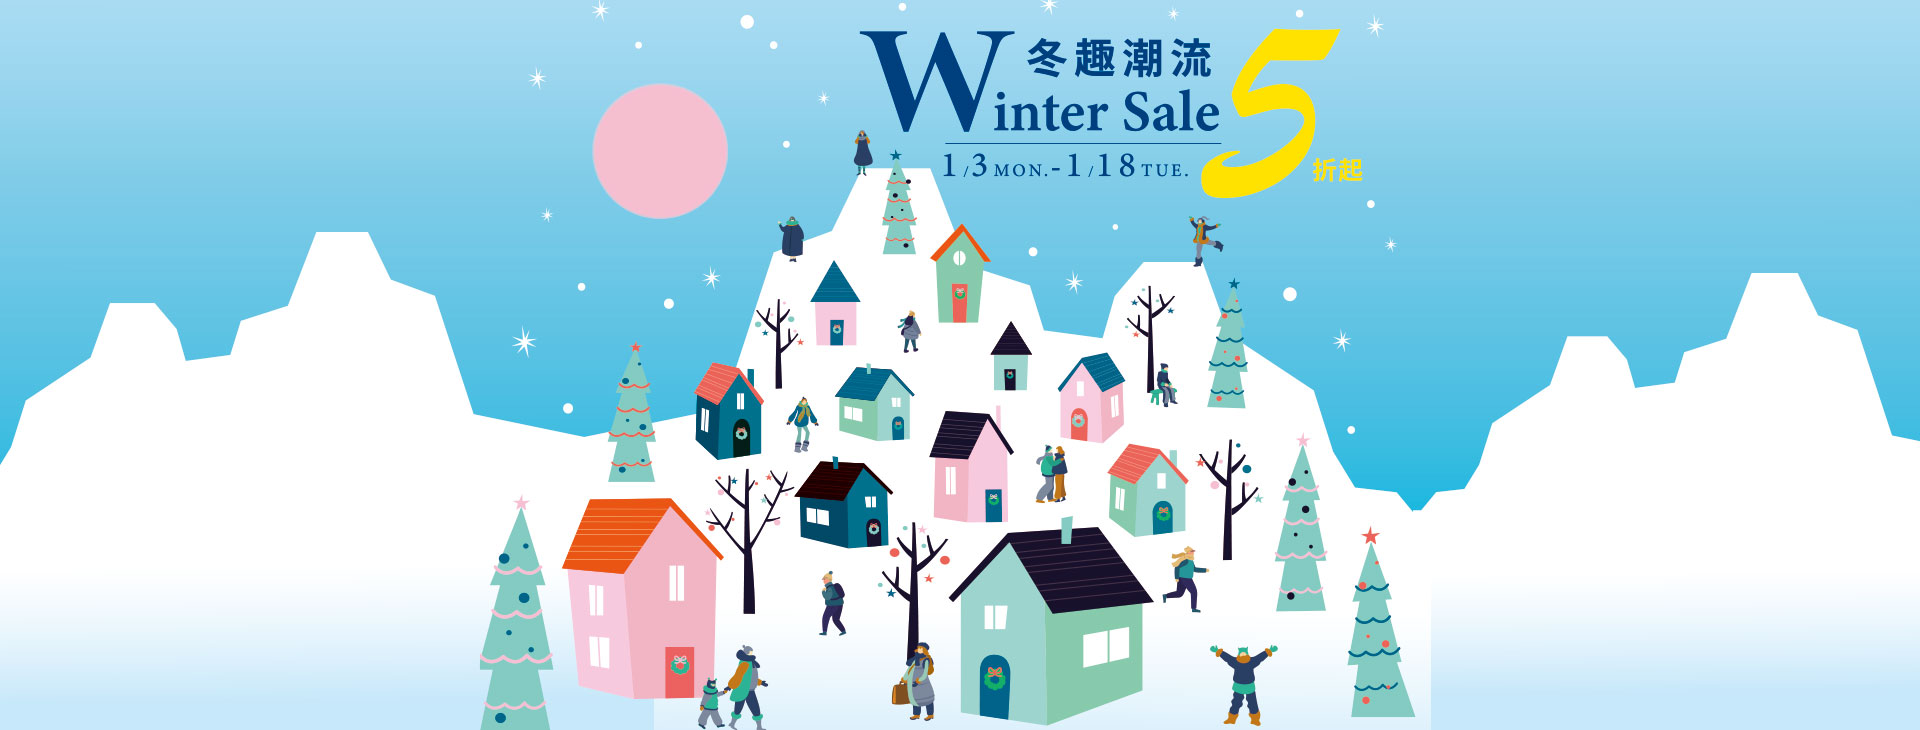 Winter Sale 5折起